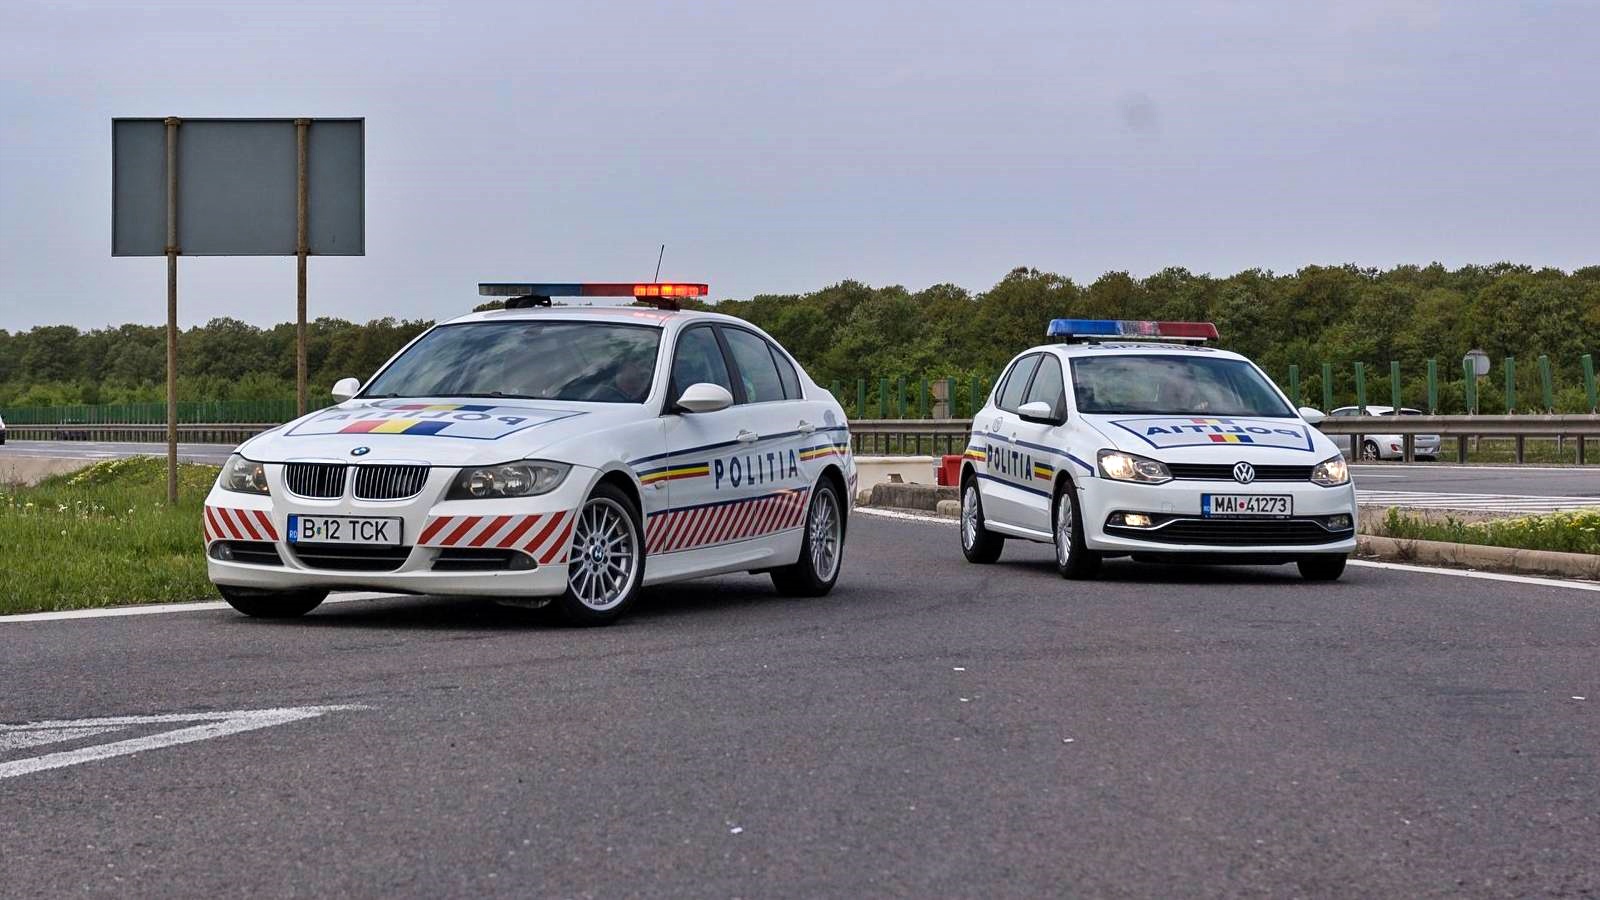 New Warning Romanian Police Road Traffic